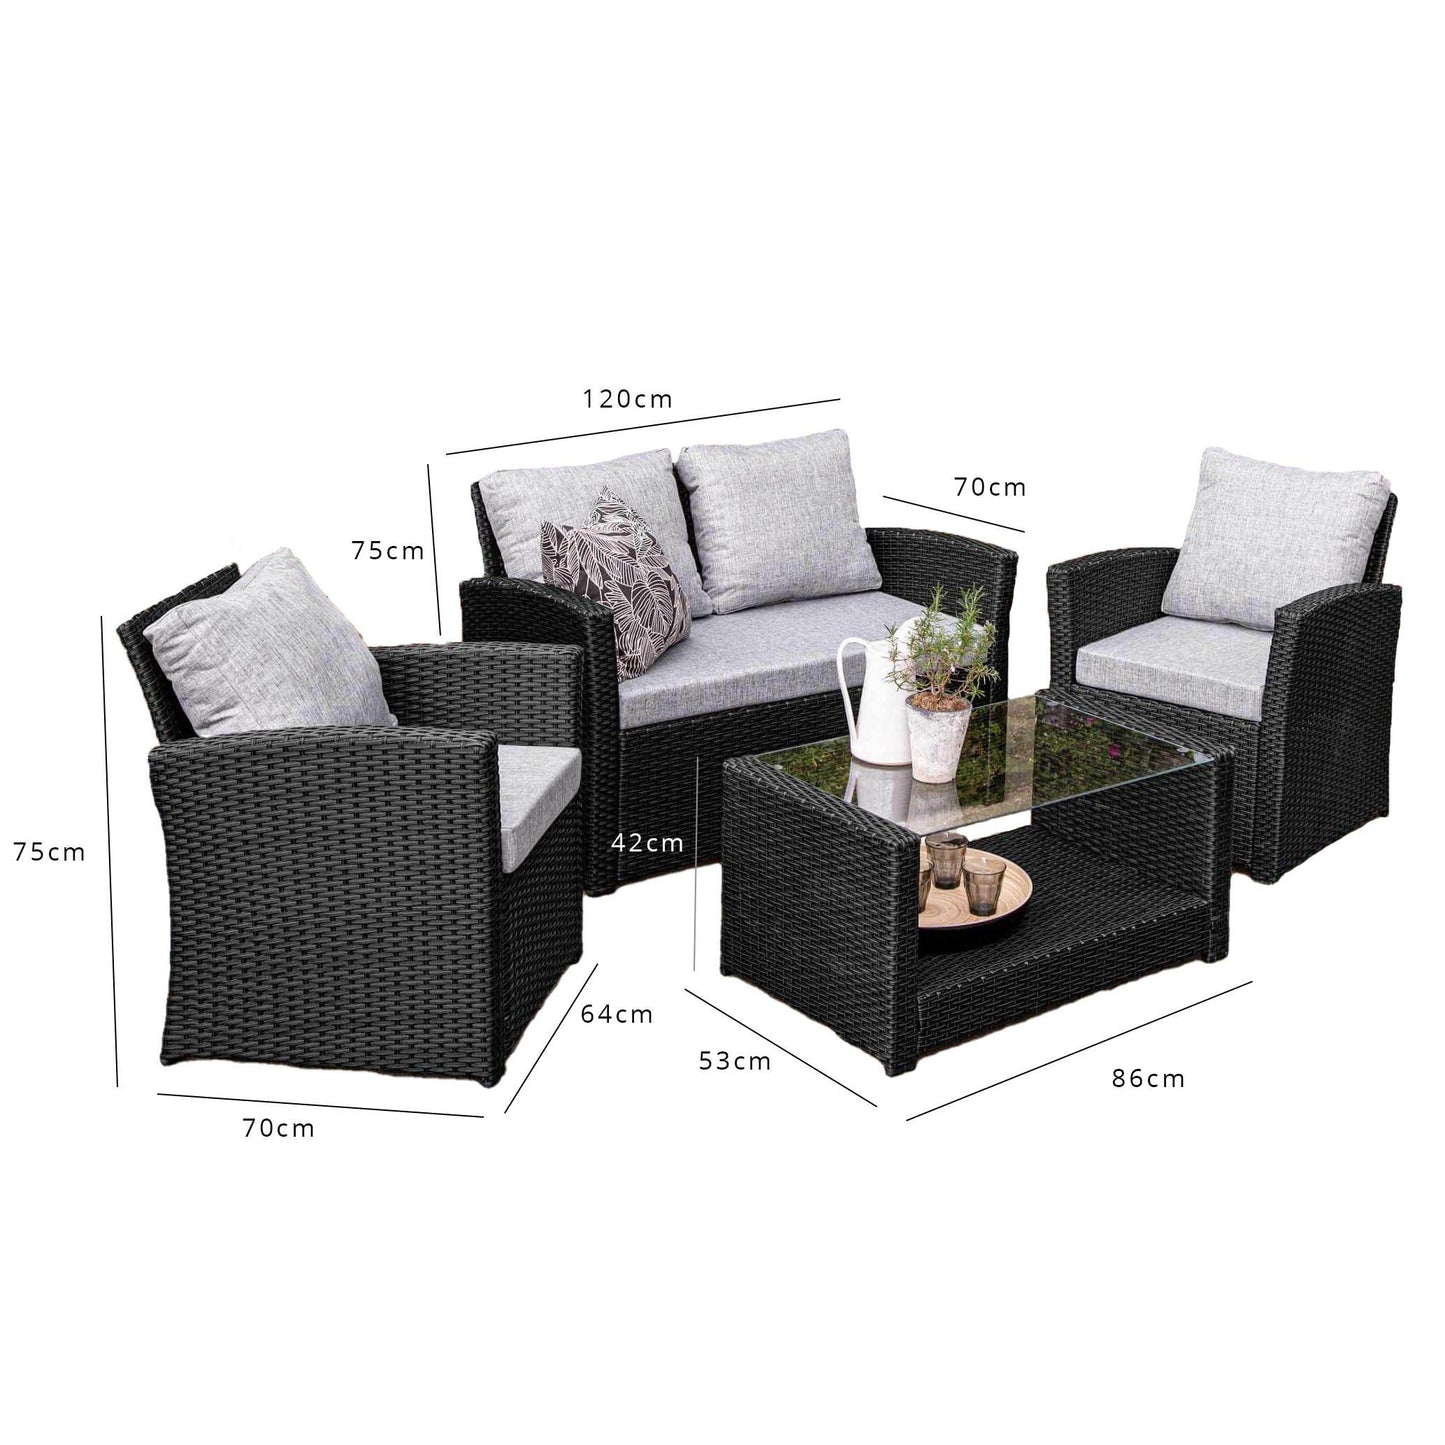 Cote garden sofa set - LED cantilever parasol - 4 seater - black rattan